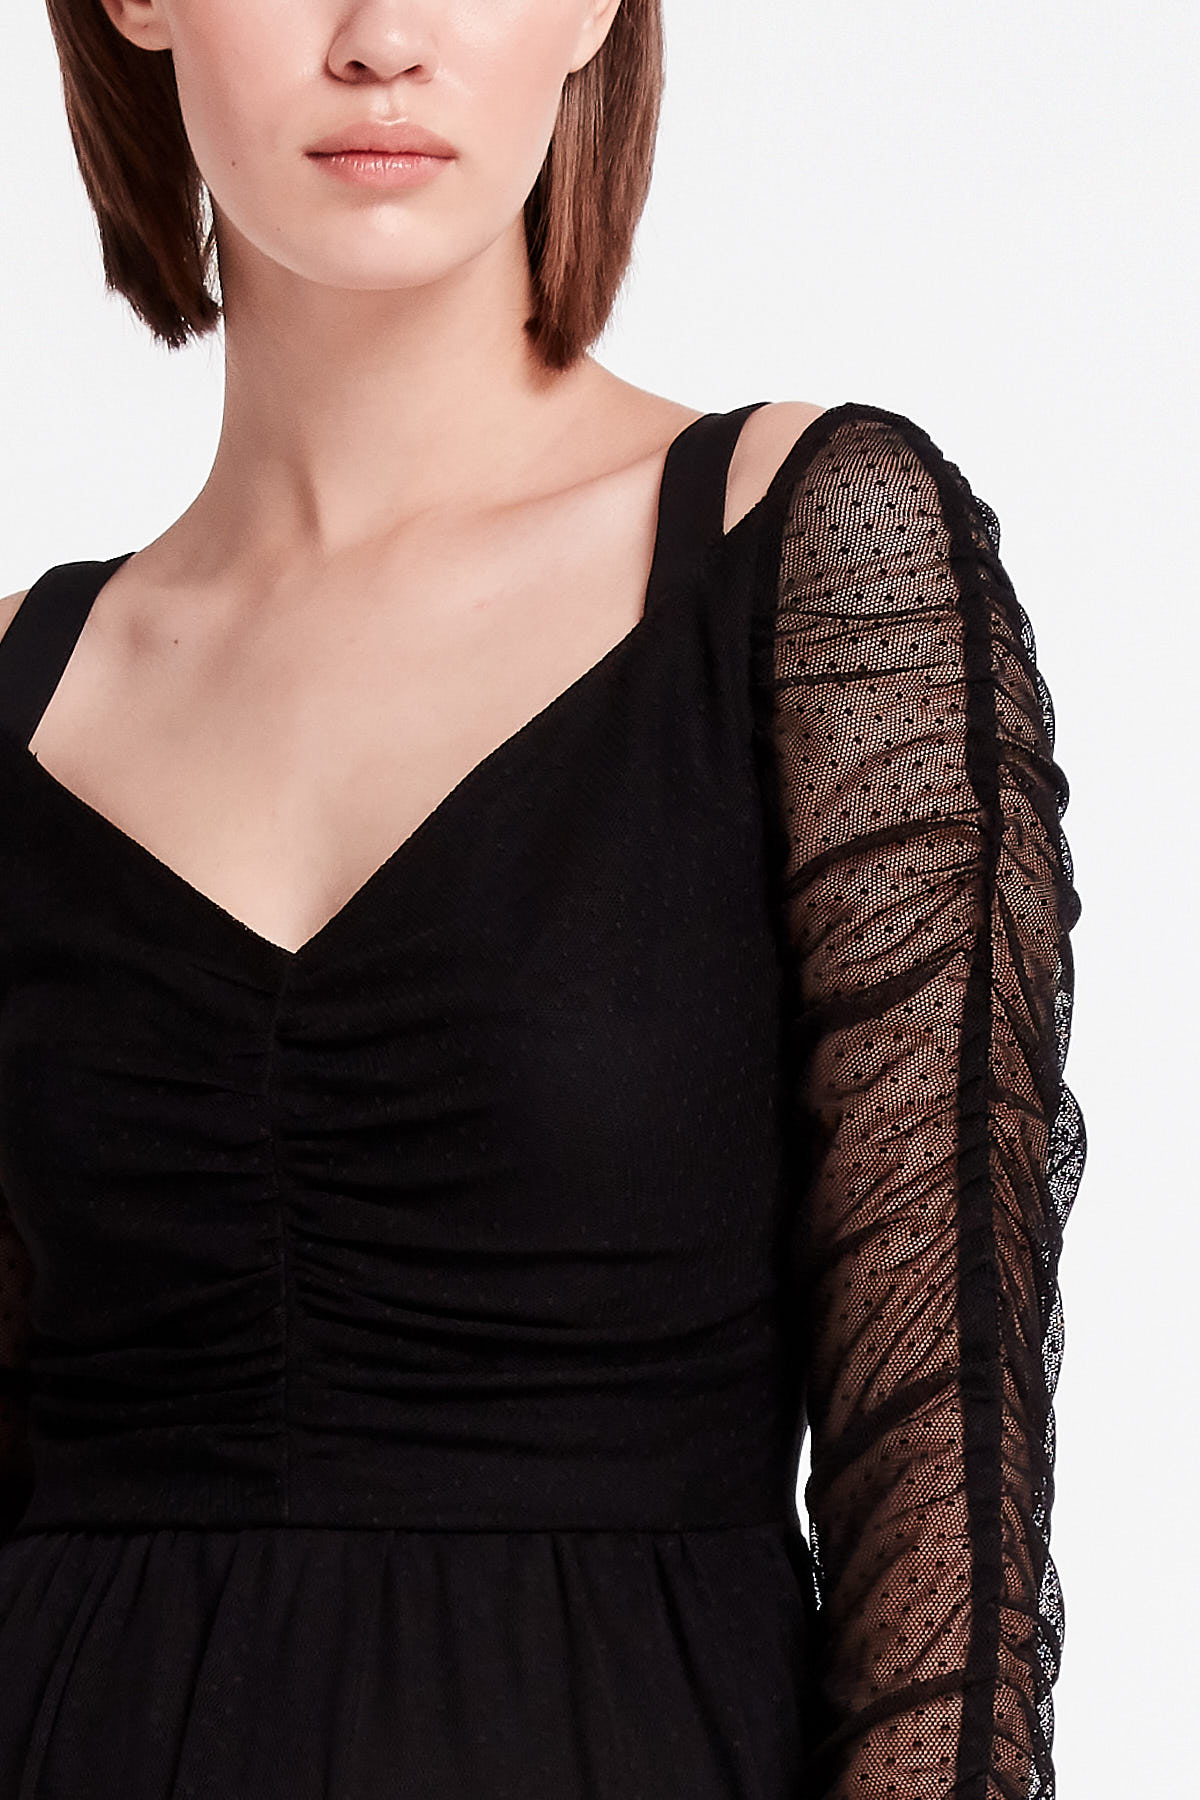 Black midi dress with breast bands, photo 2